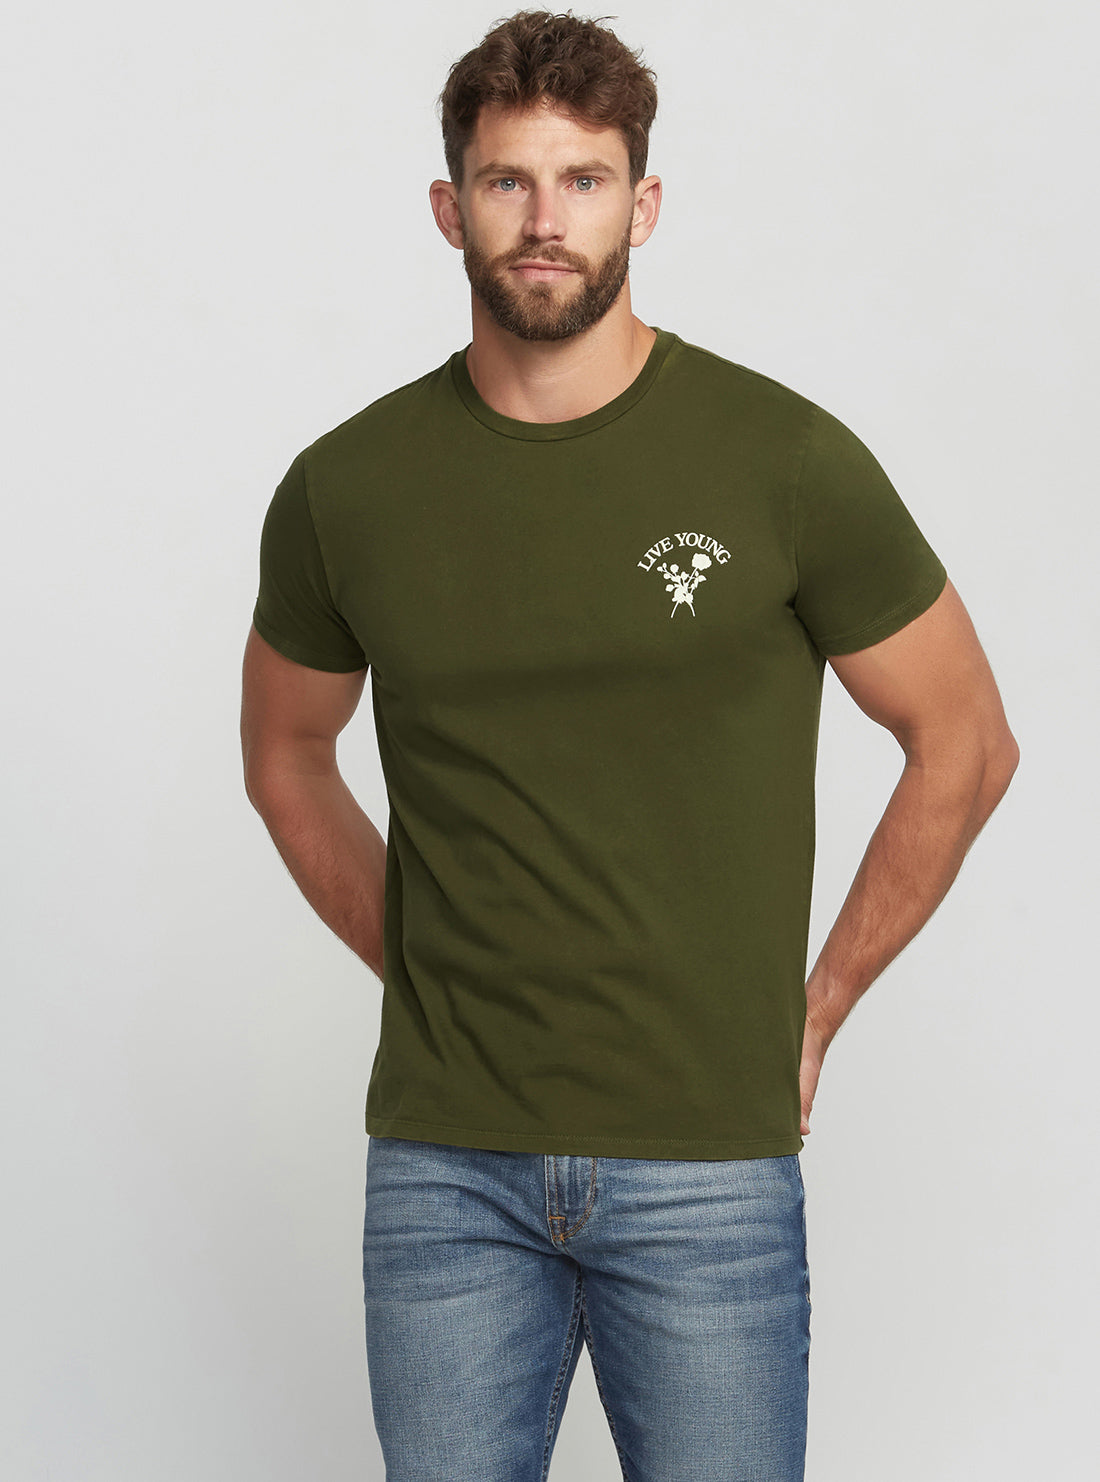 GUESS Men's Green Multi Live Young T-Shirt M2BI74KBDL0 Front View